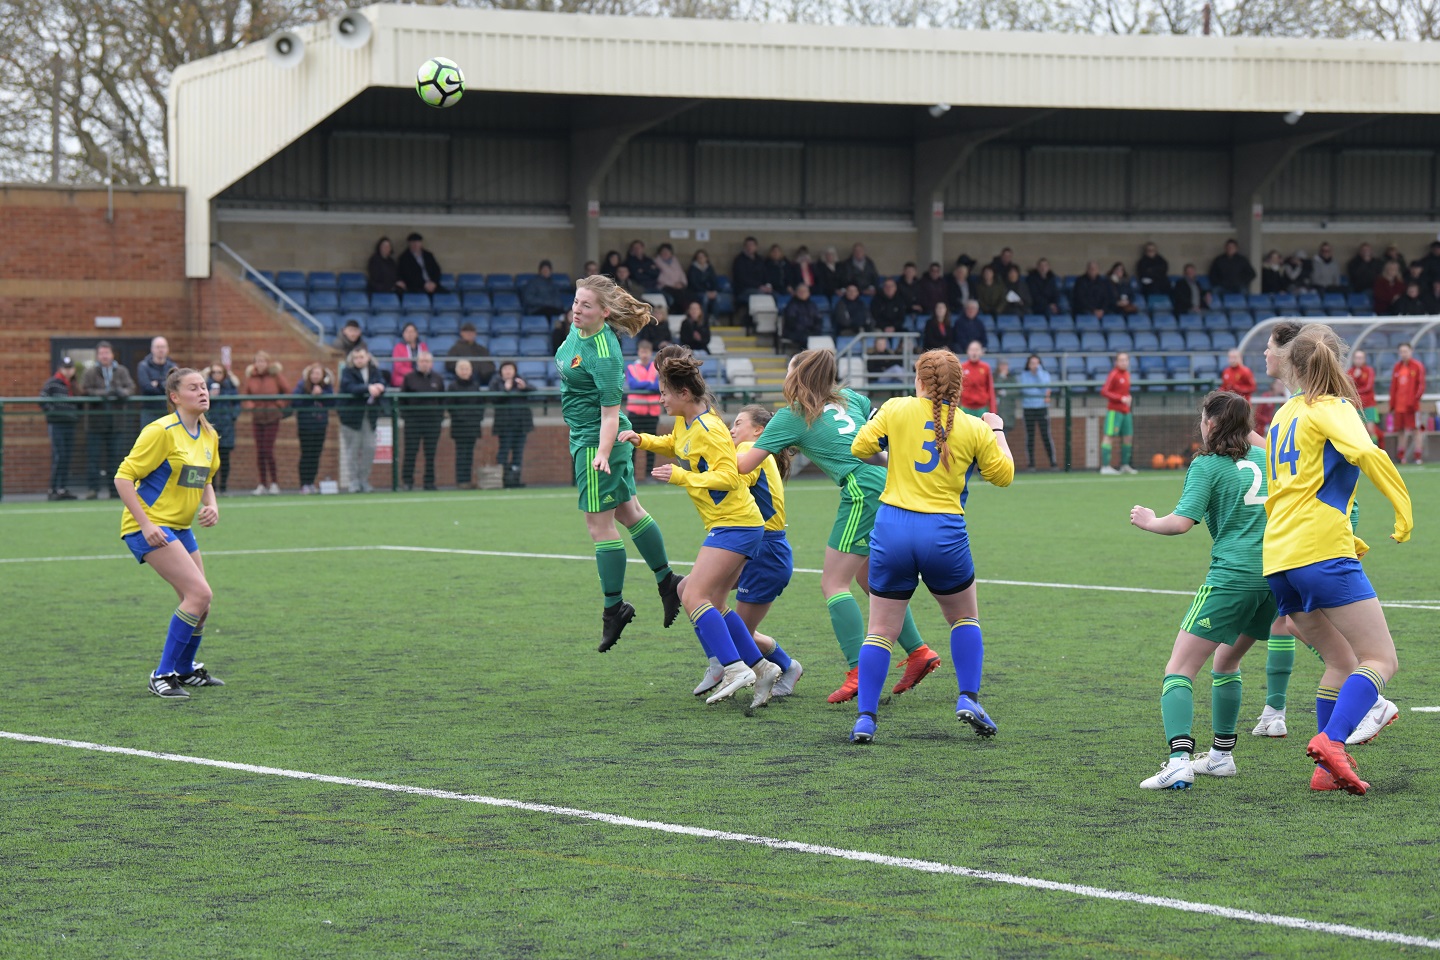 Watford FC Girls vs St Albans City Girls, Hertfordshire FA Girls U16 County Cup Final 2019